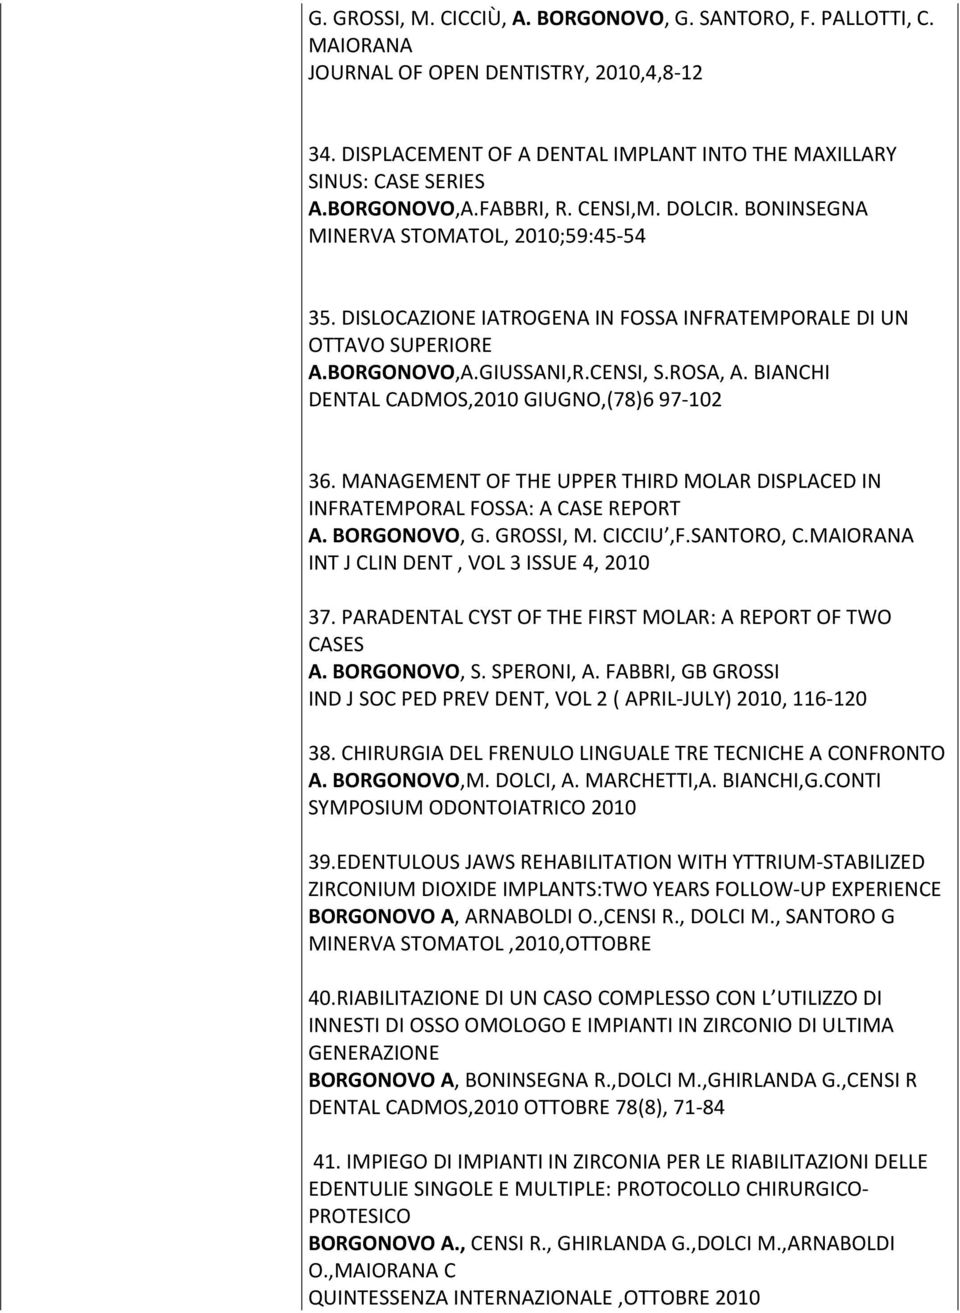 BIANCHI DENTAL CADMOS,2010 GIUGNO,(78)6 97-102 36. MANAGEMENT OF THE UPPER THIRD MOLAR DISPLACED IN INFRATEMPORAL FOSSA: A CASE REPORT A. BORGONOVO, G. GROSSI, M. CICCIU,F.SANTORO, C.